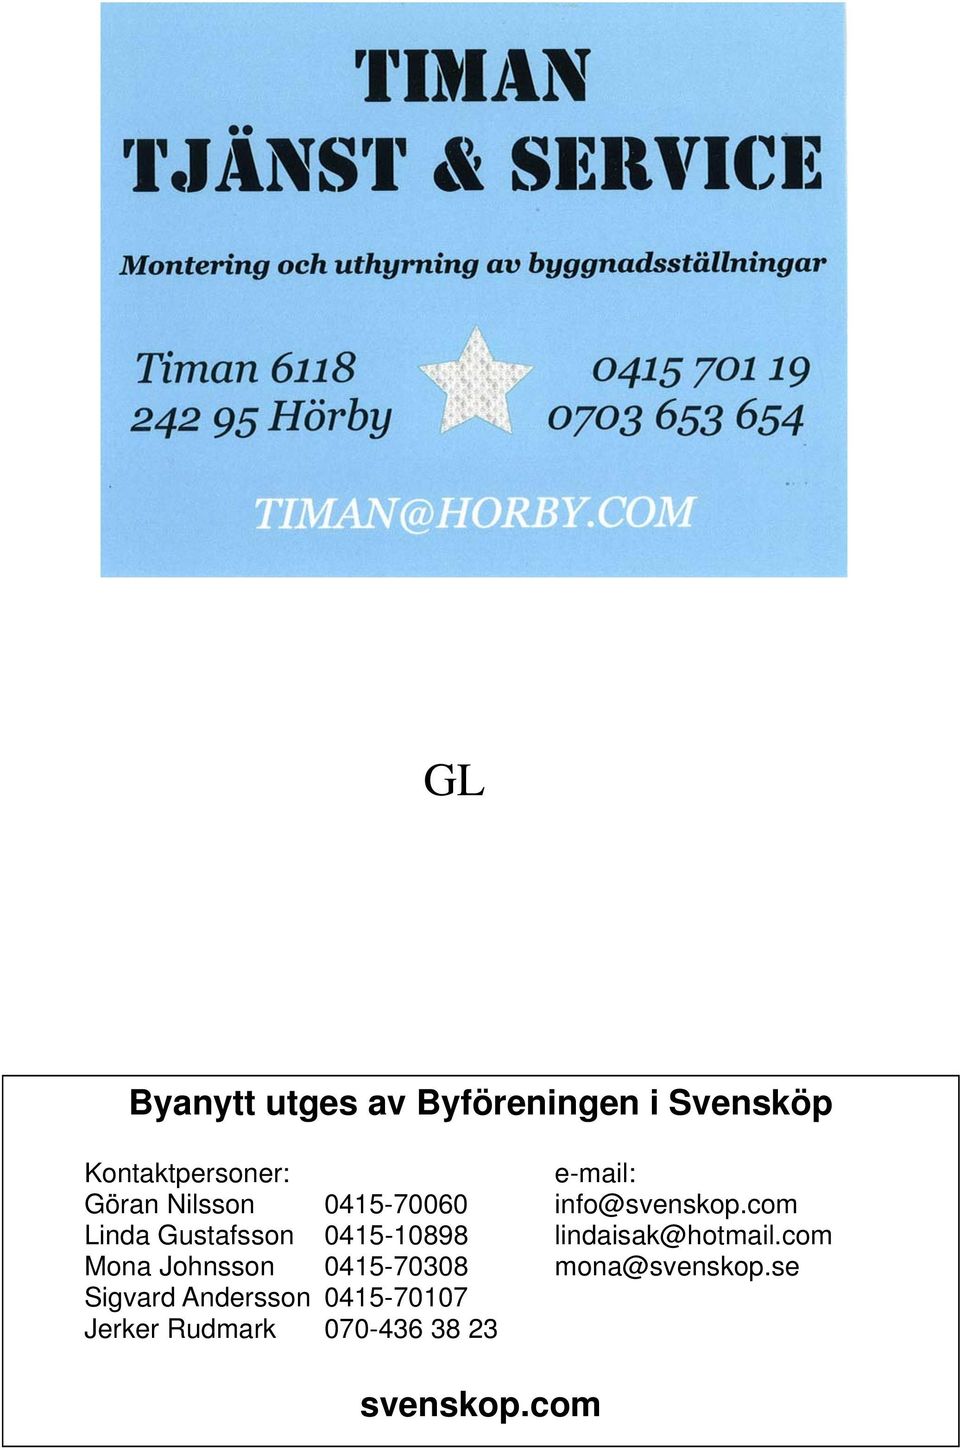 0415-70308 Sigvard Andersson 0415-70107 Jerker Rudmark 070-436 38 23